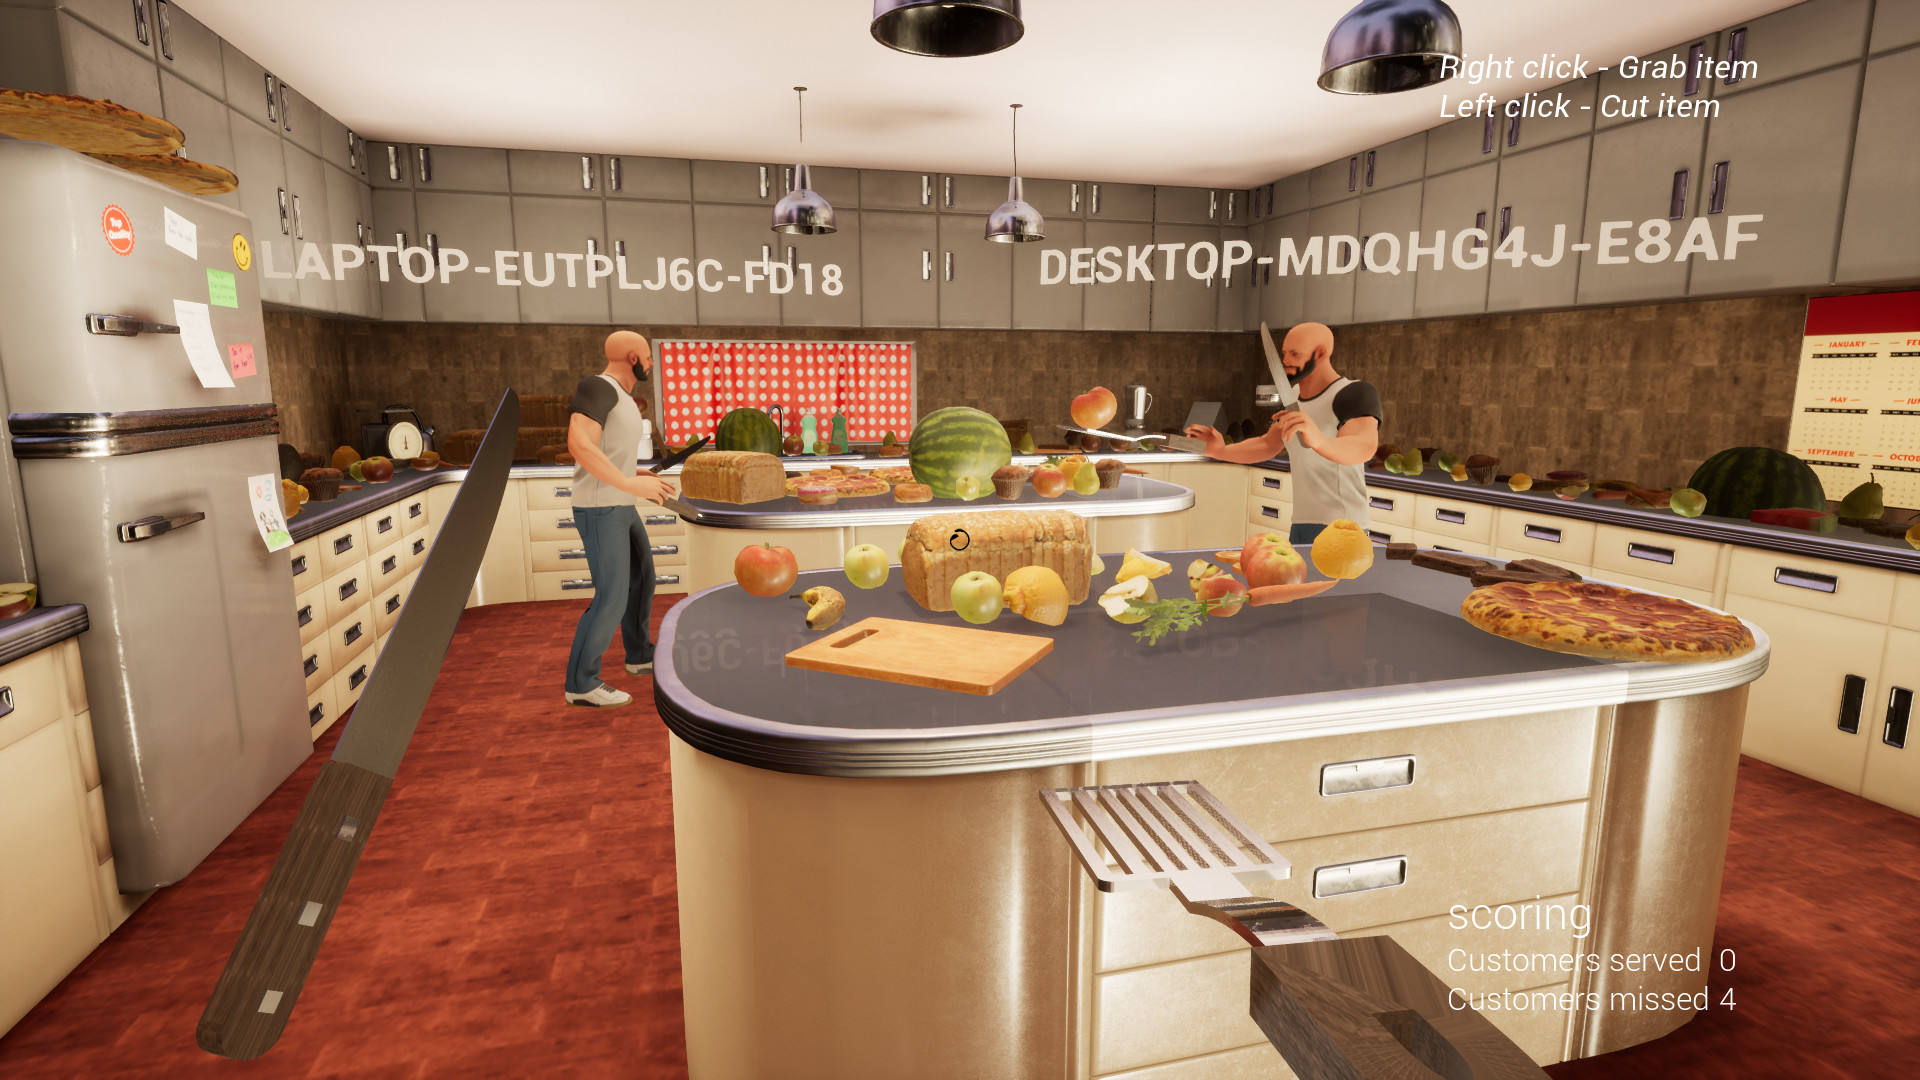 kitchen simulator game